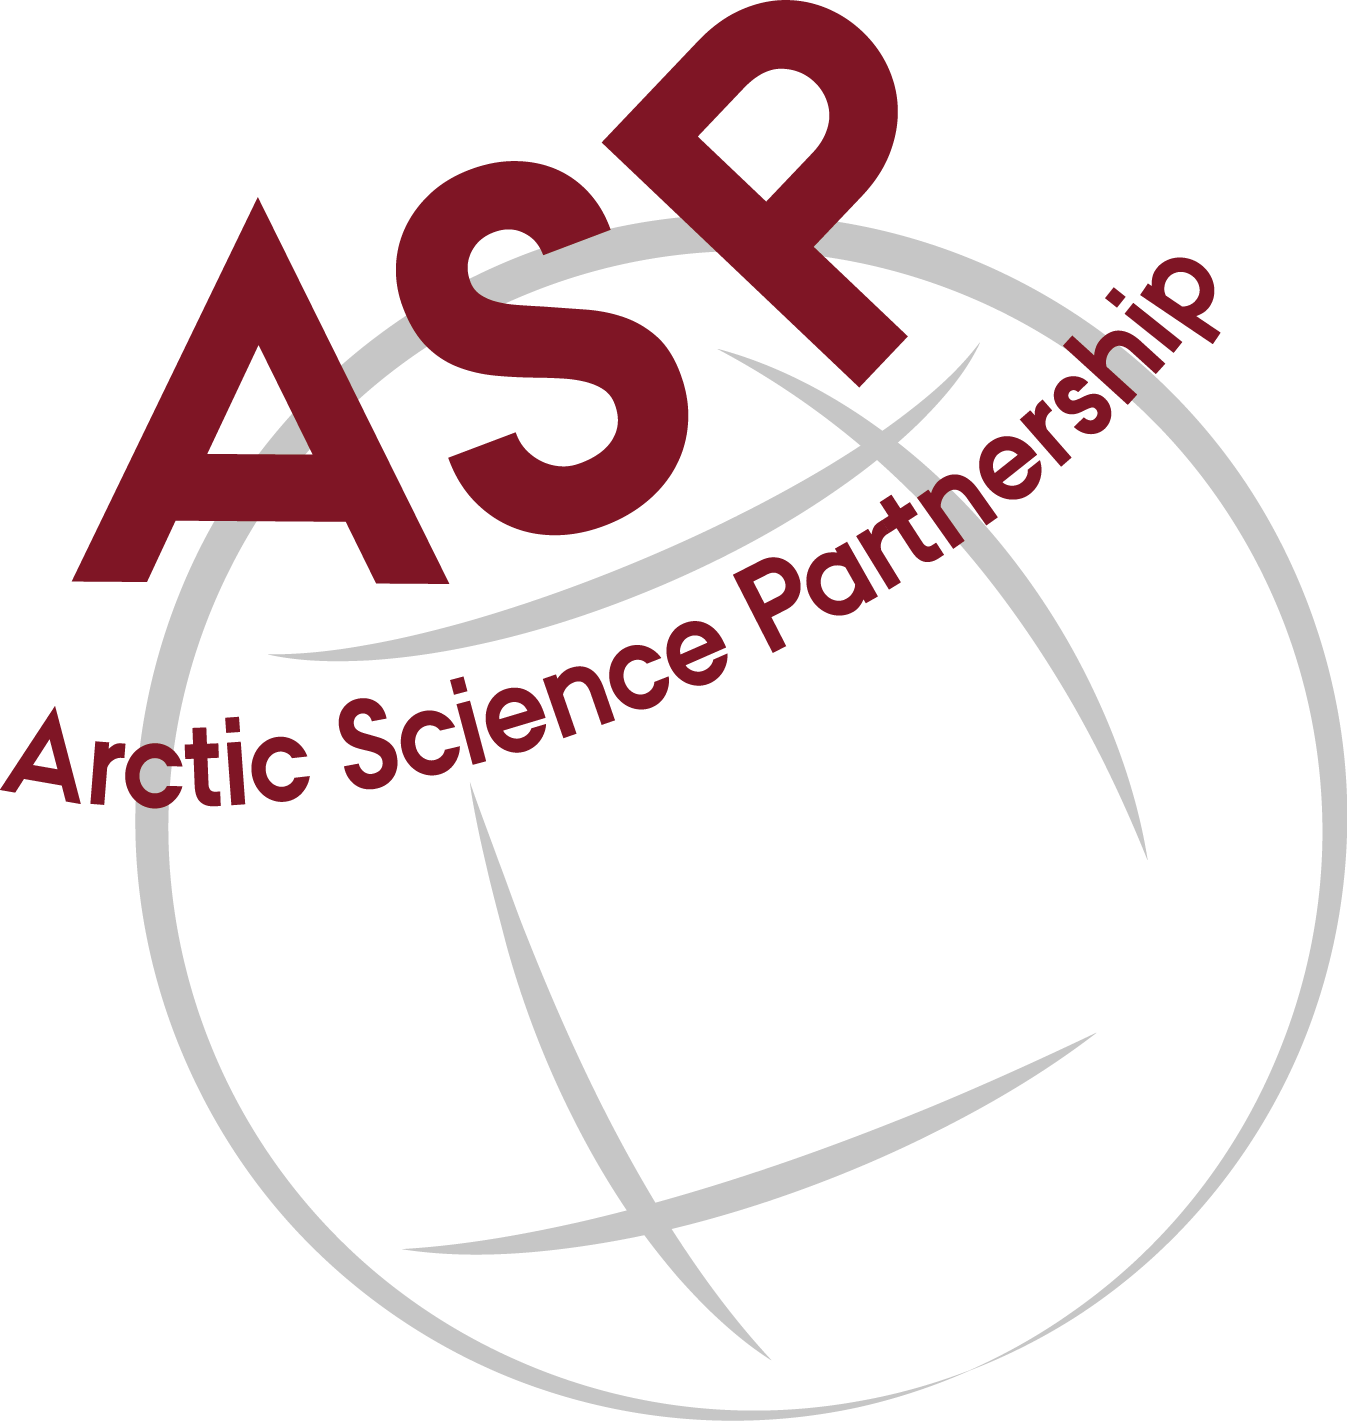 ASP Logo - Acknowledgements, logos & templates. ARCTIC SCIENCE PARTNERSHIP